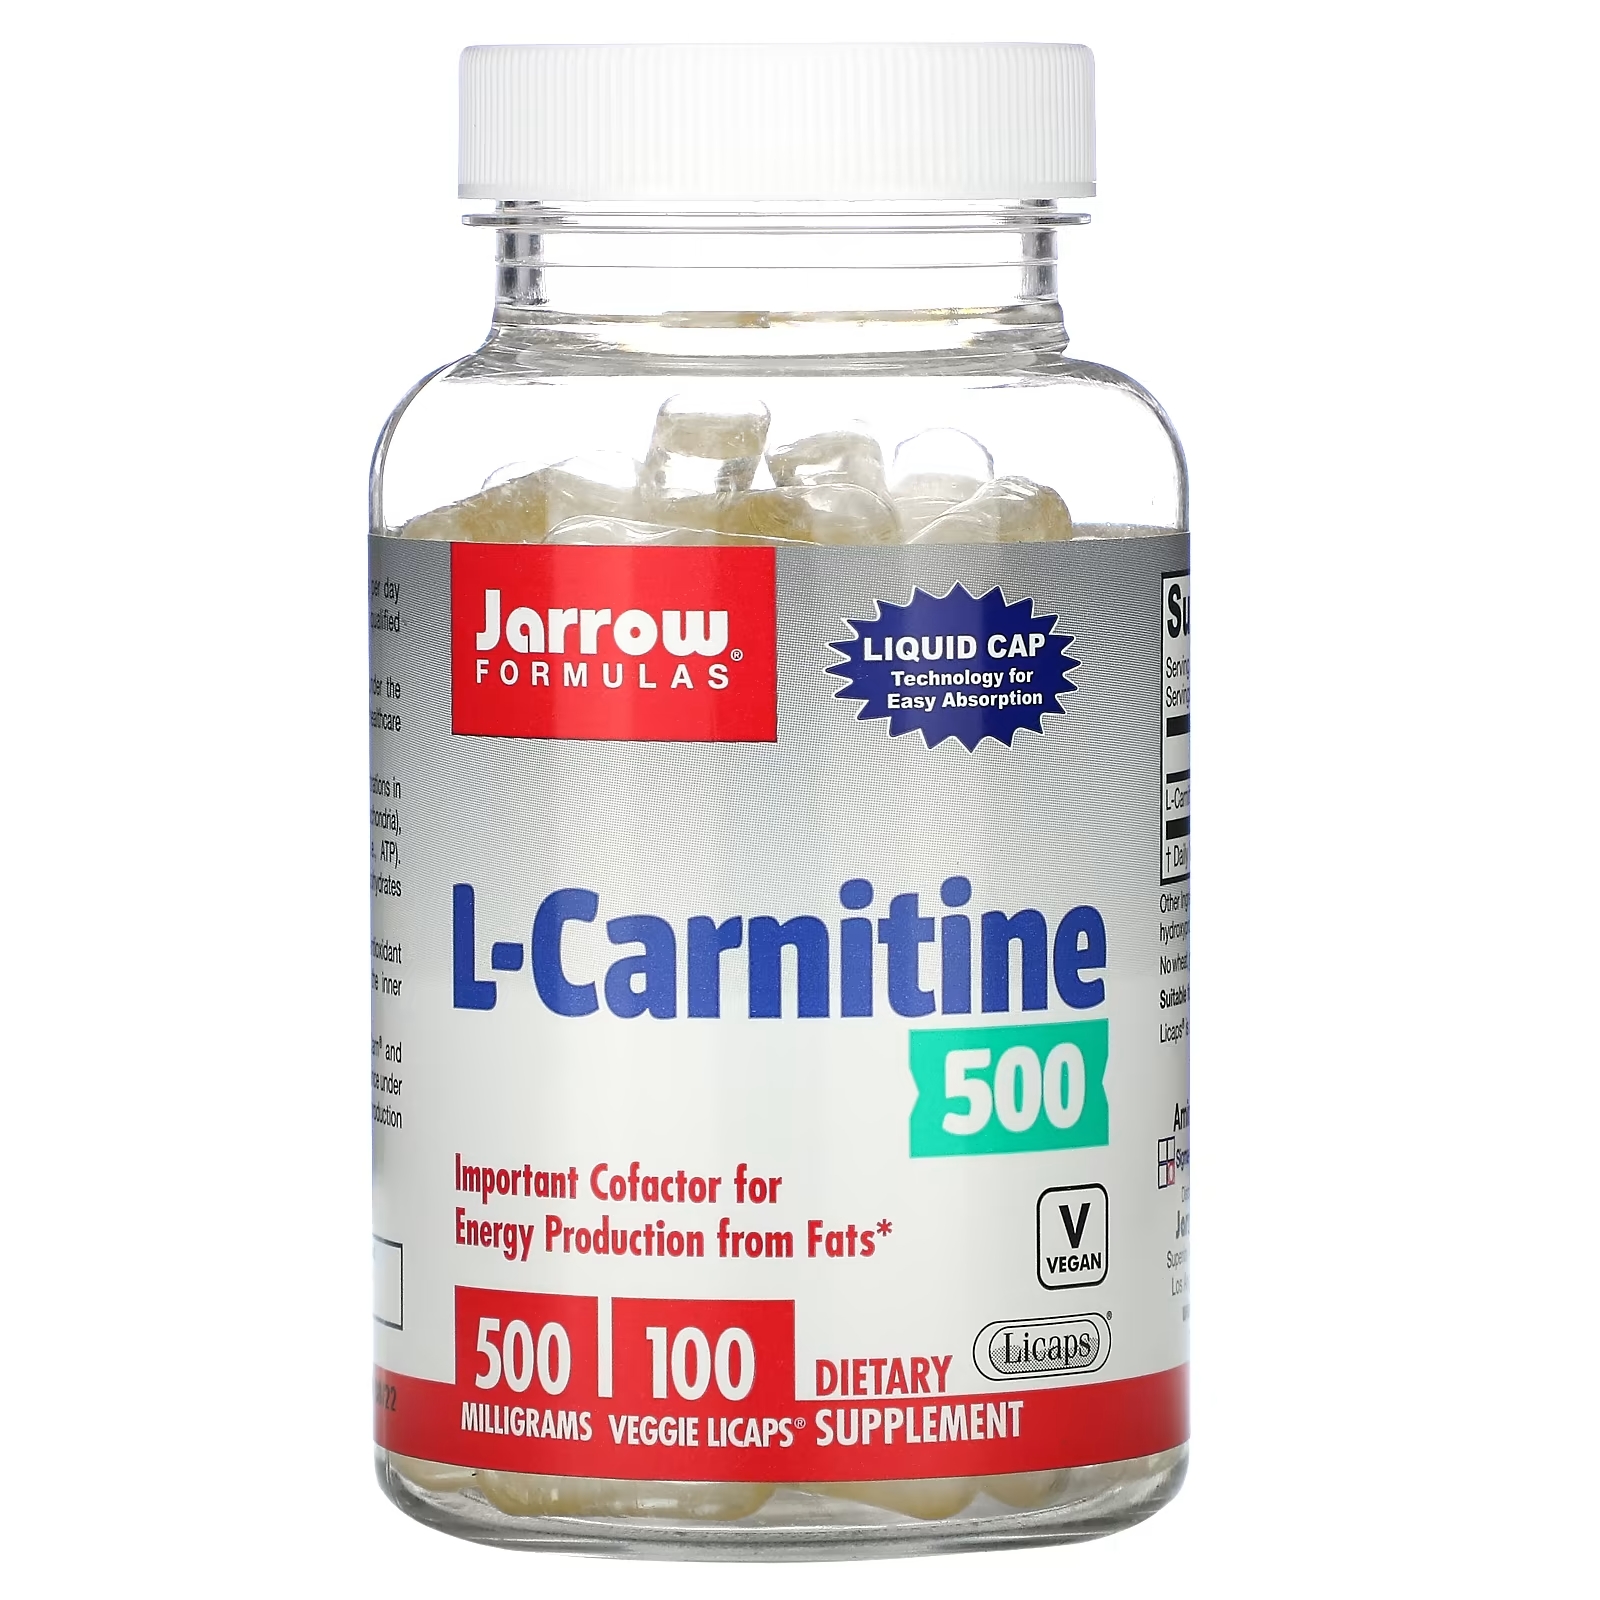 Jarrow Formulas L-карнитин 500 500 мг, 100 вегетарианских капсул Licaps зеленый чай 500 мг 100 вегетарианских капсул jarrow formulas